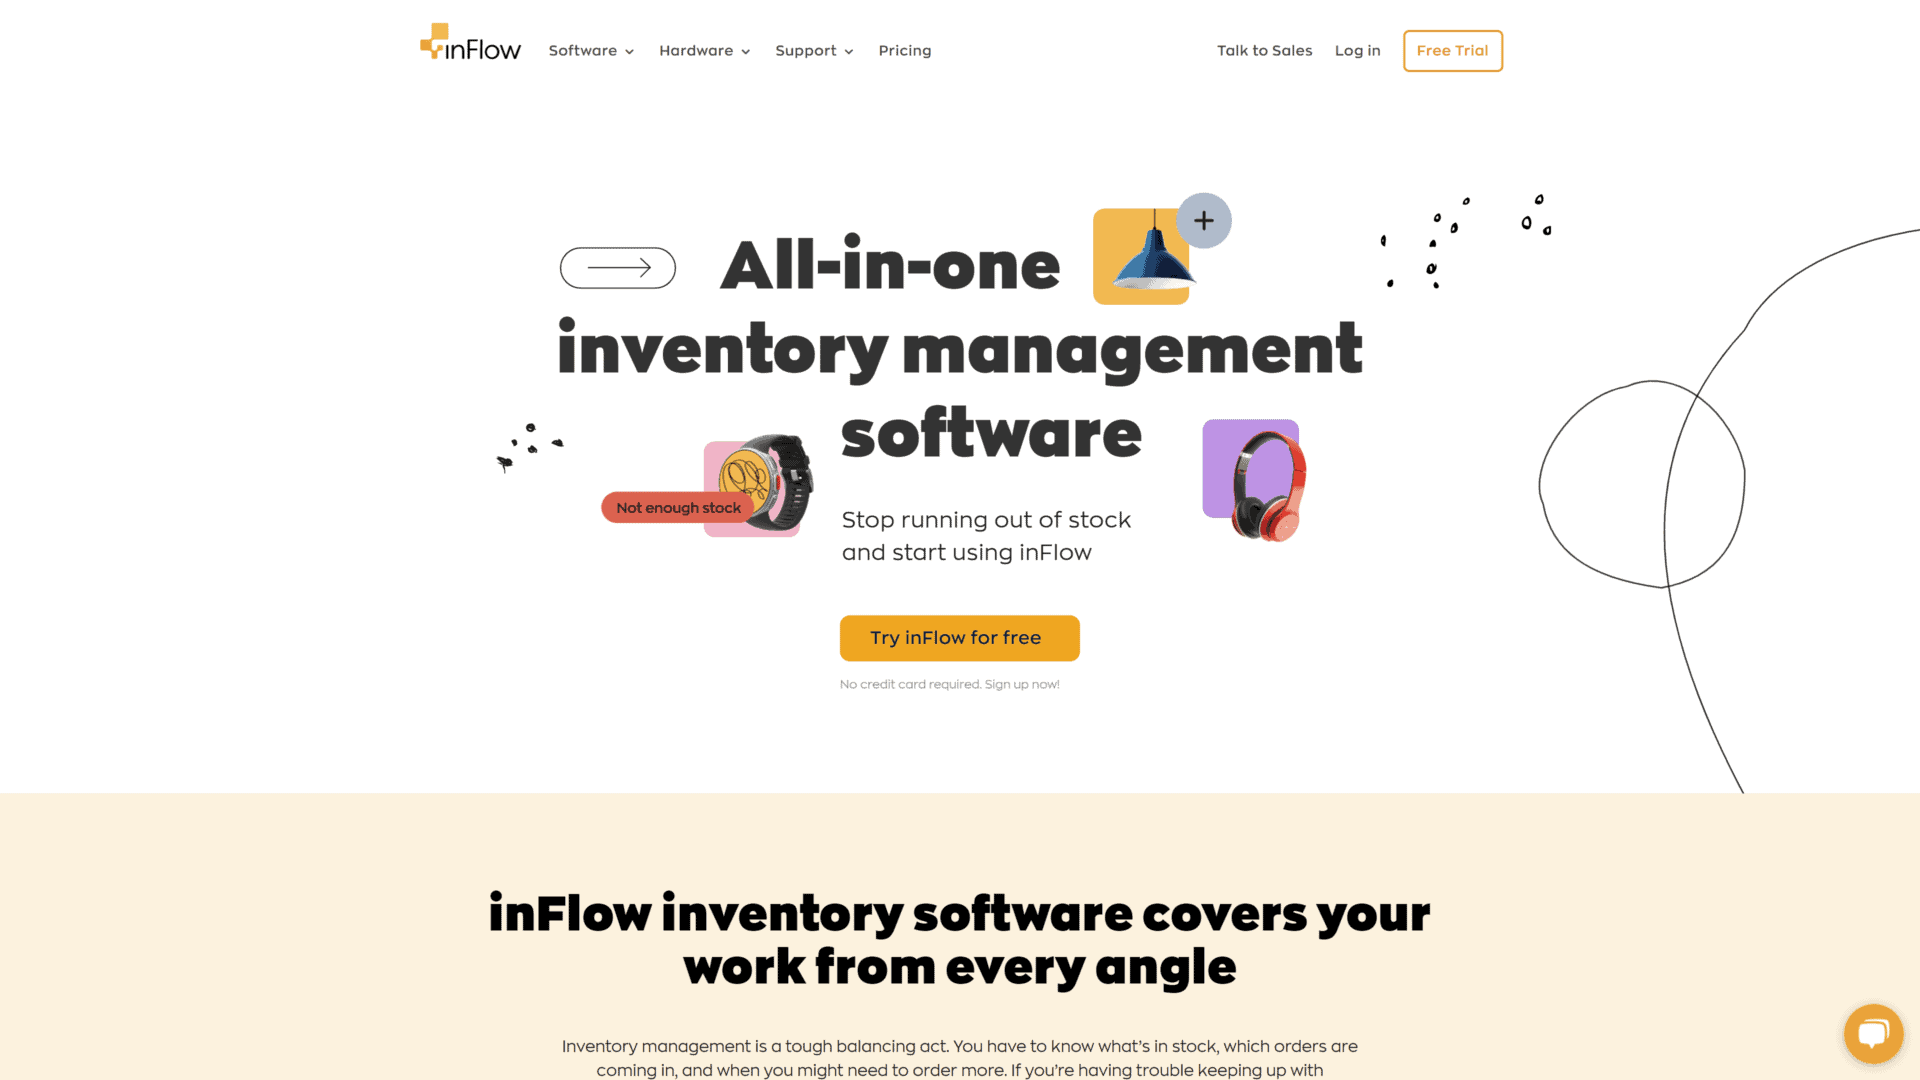 inflowinventory homepage screenshot 1